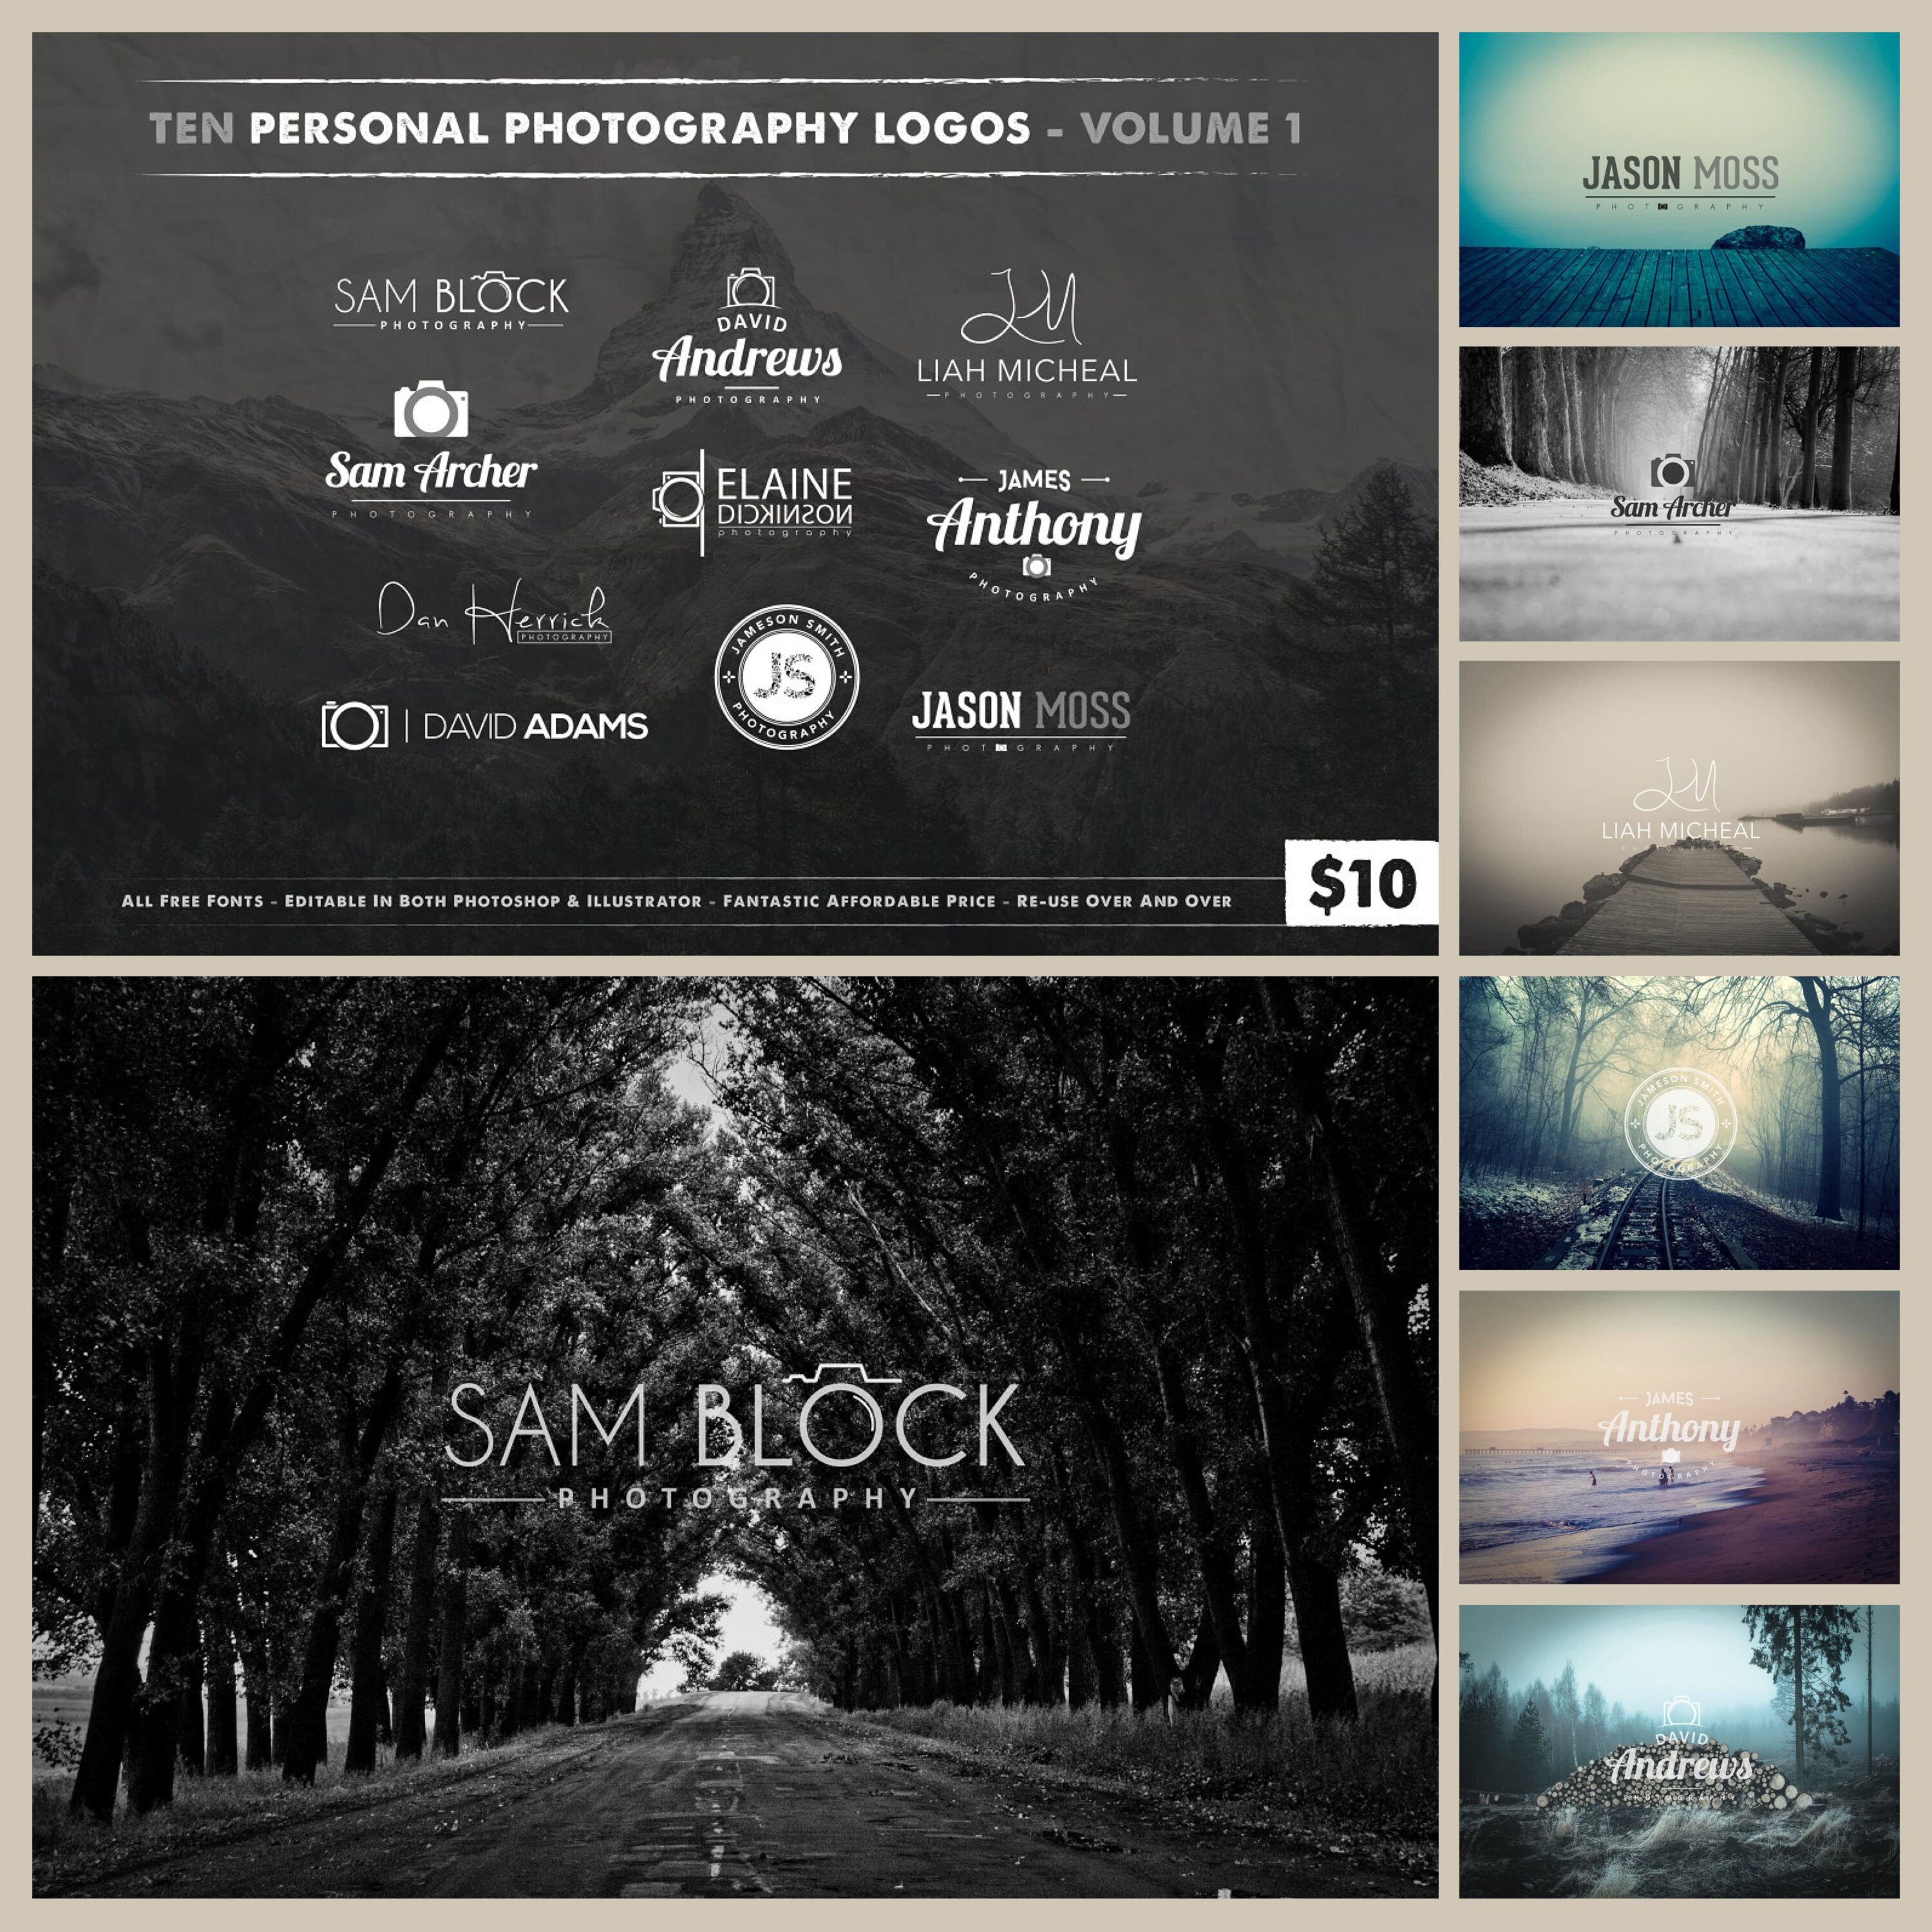 Photography Logos Vol 1 cover.